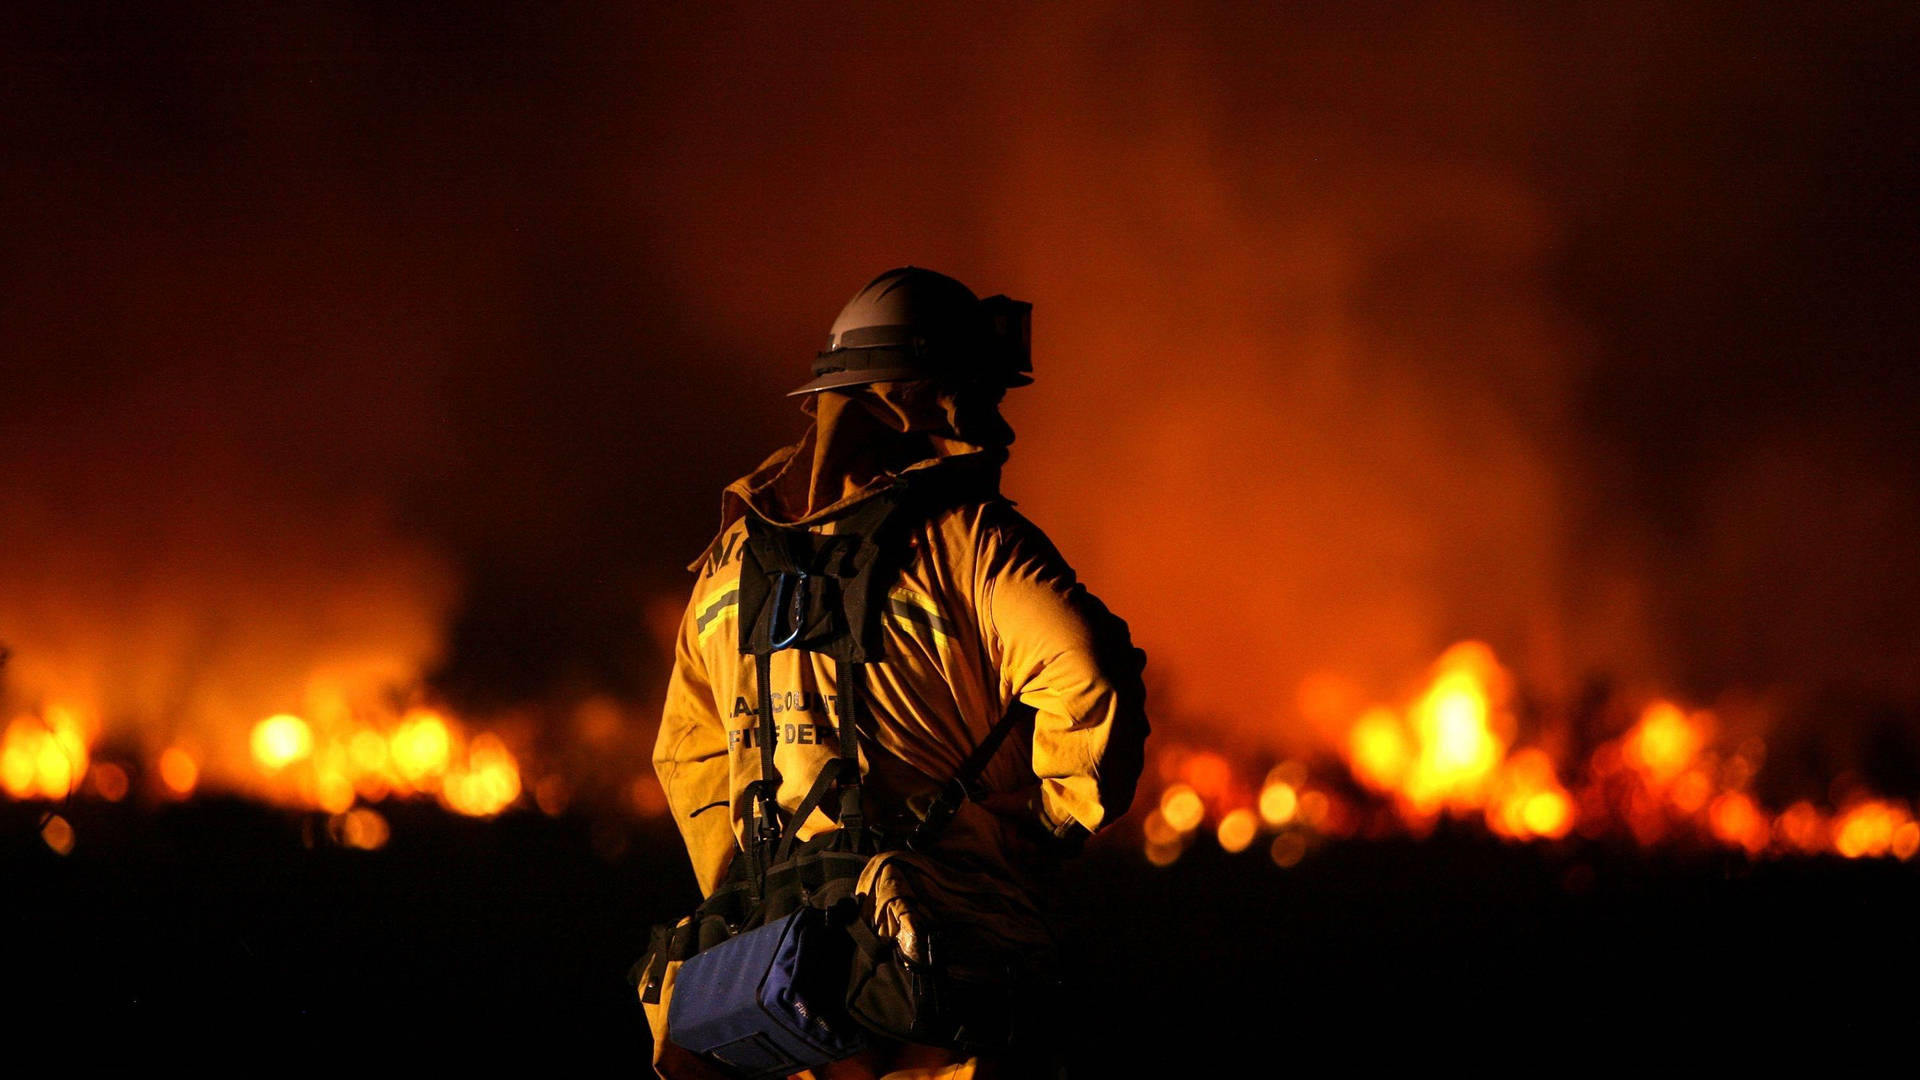 Brave Firefighter Extinguishing Flames Background